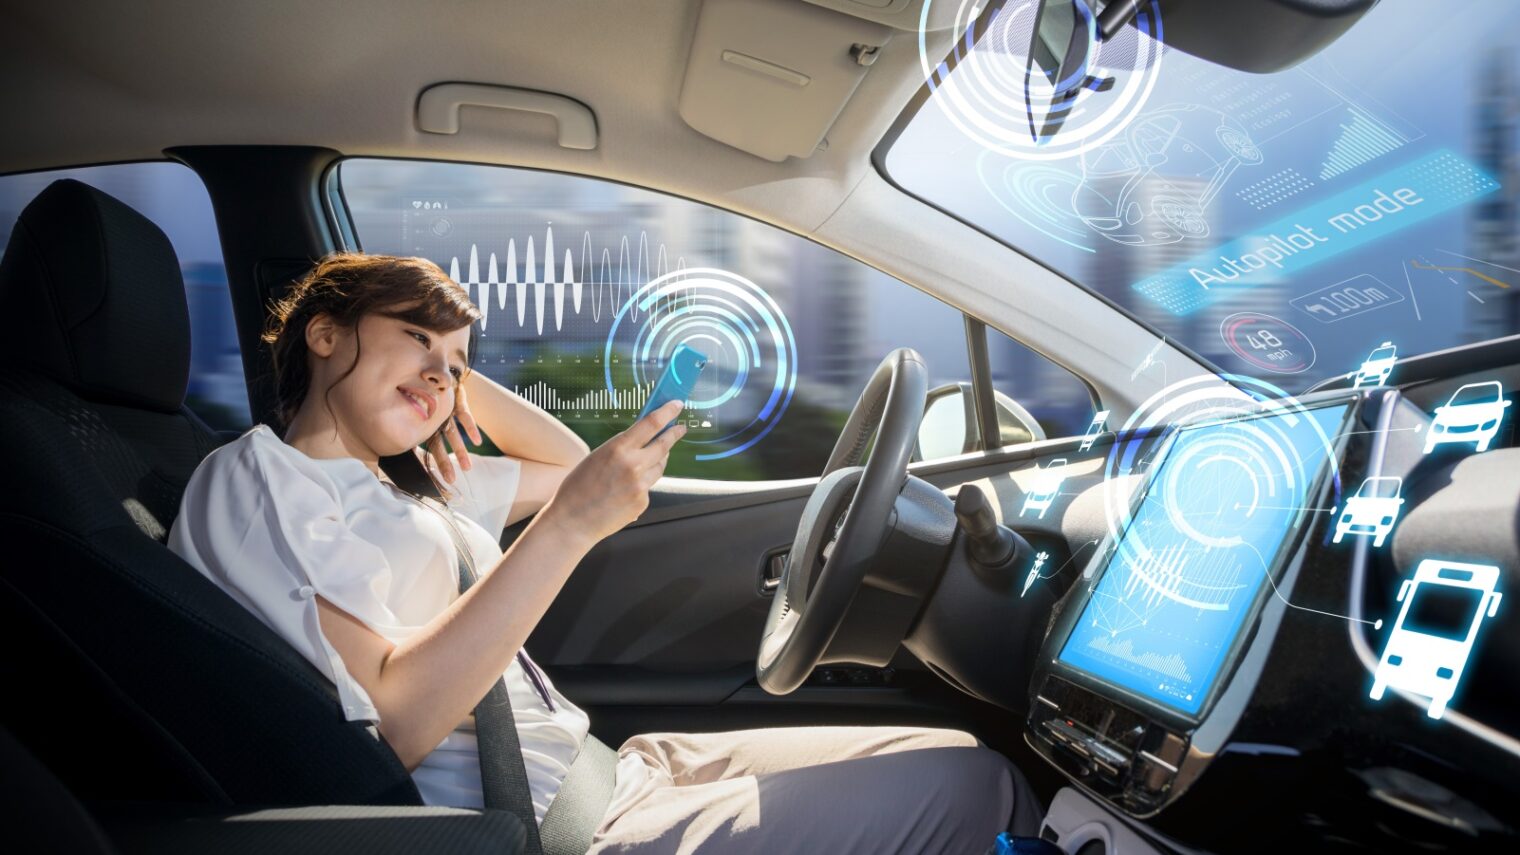 Autonomous driving image by Chombosan/Shutterstock.com